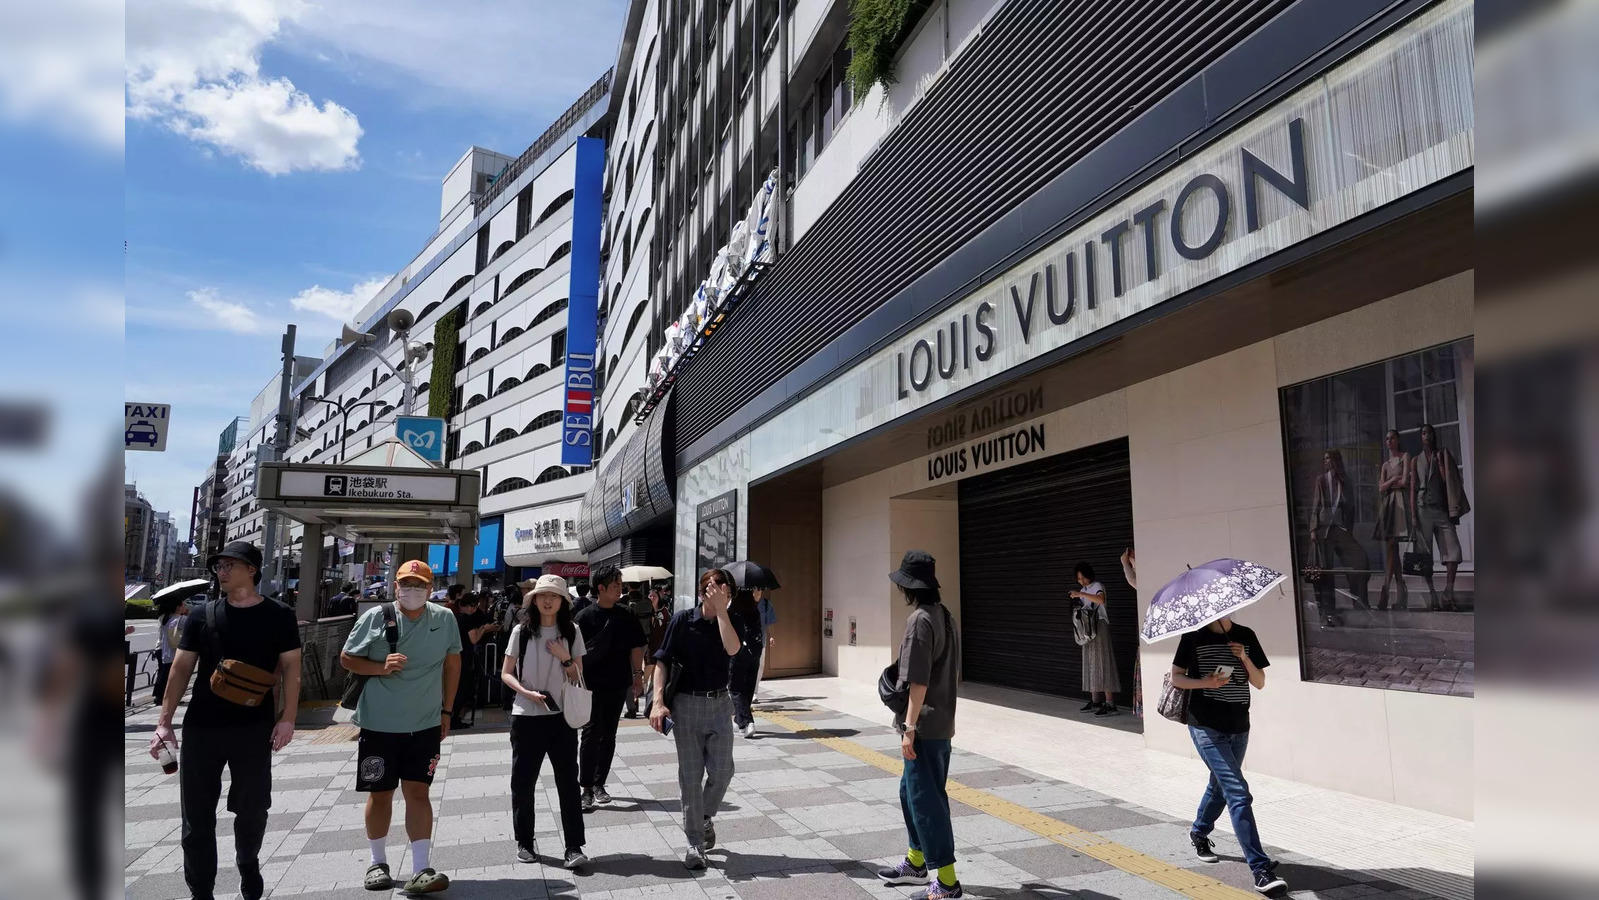 louis vuitton: Louis Vuitton picks up space in RIL's Jio World Plaza in